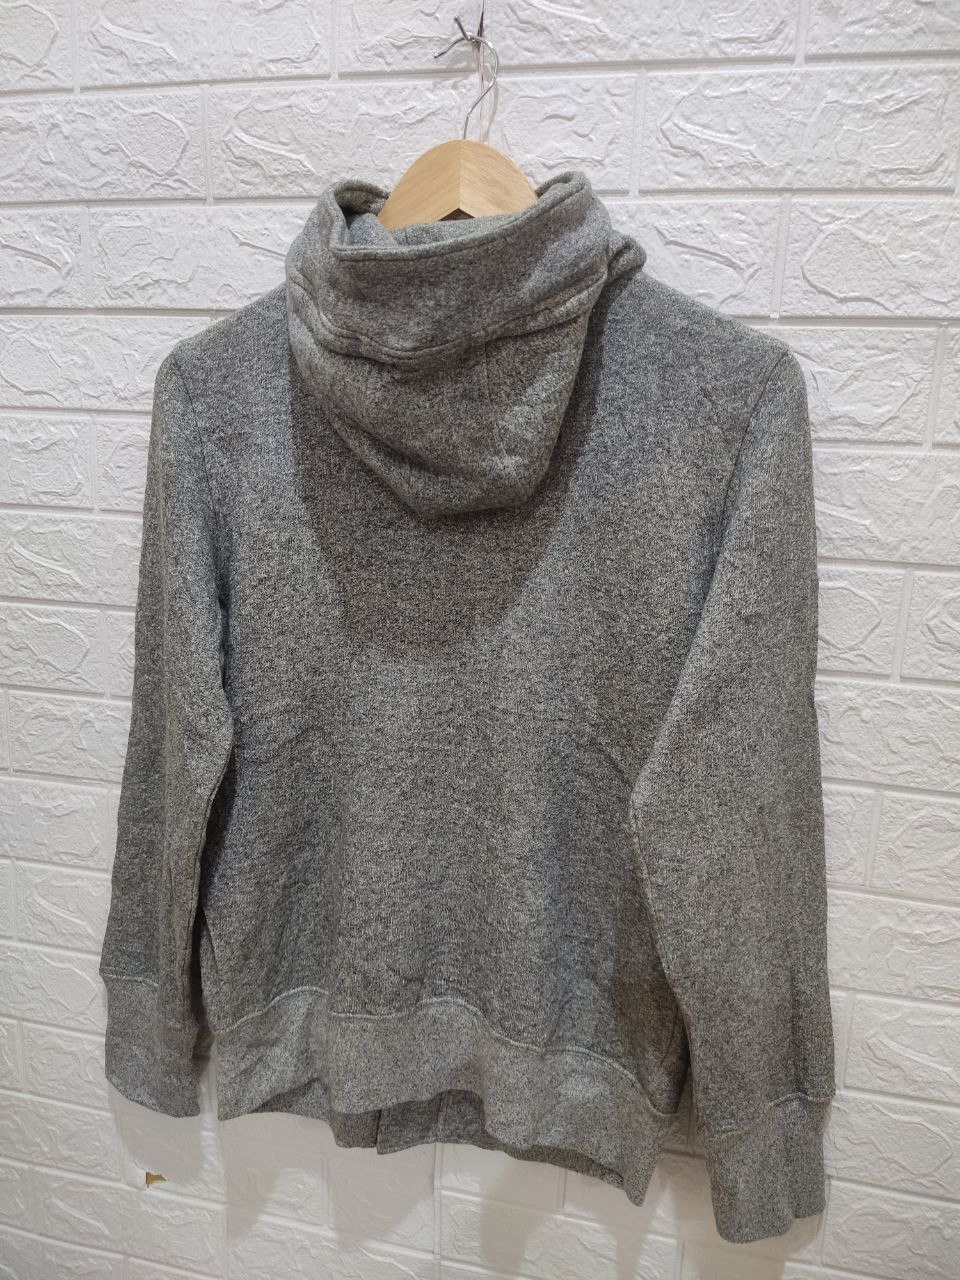 Archival Clothing - Japanese Brand Three Stones Throw Wool Hooded Jacket - 6